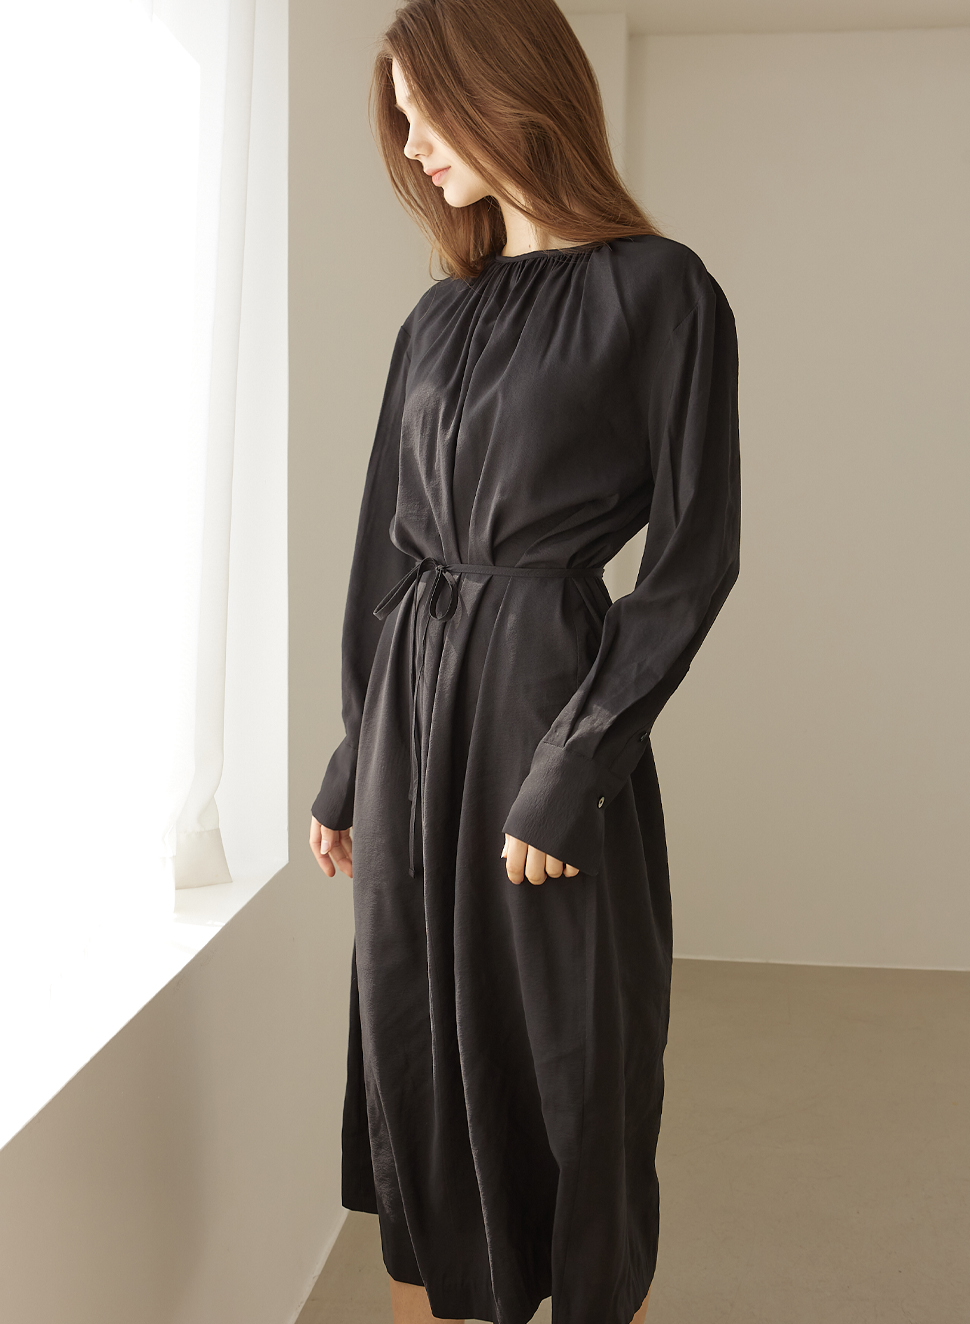 cavada dress (steinway black)